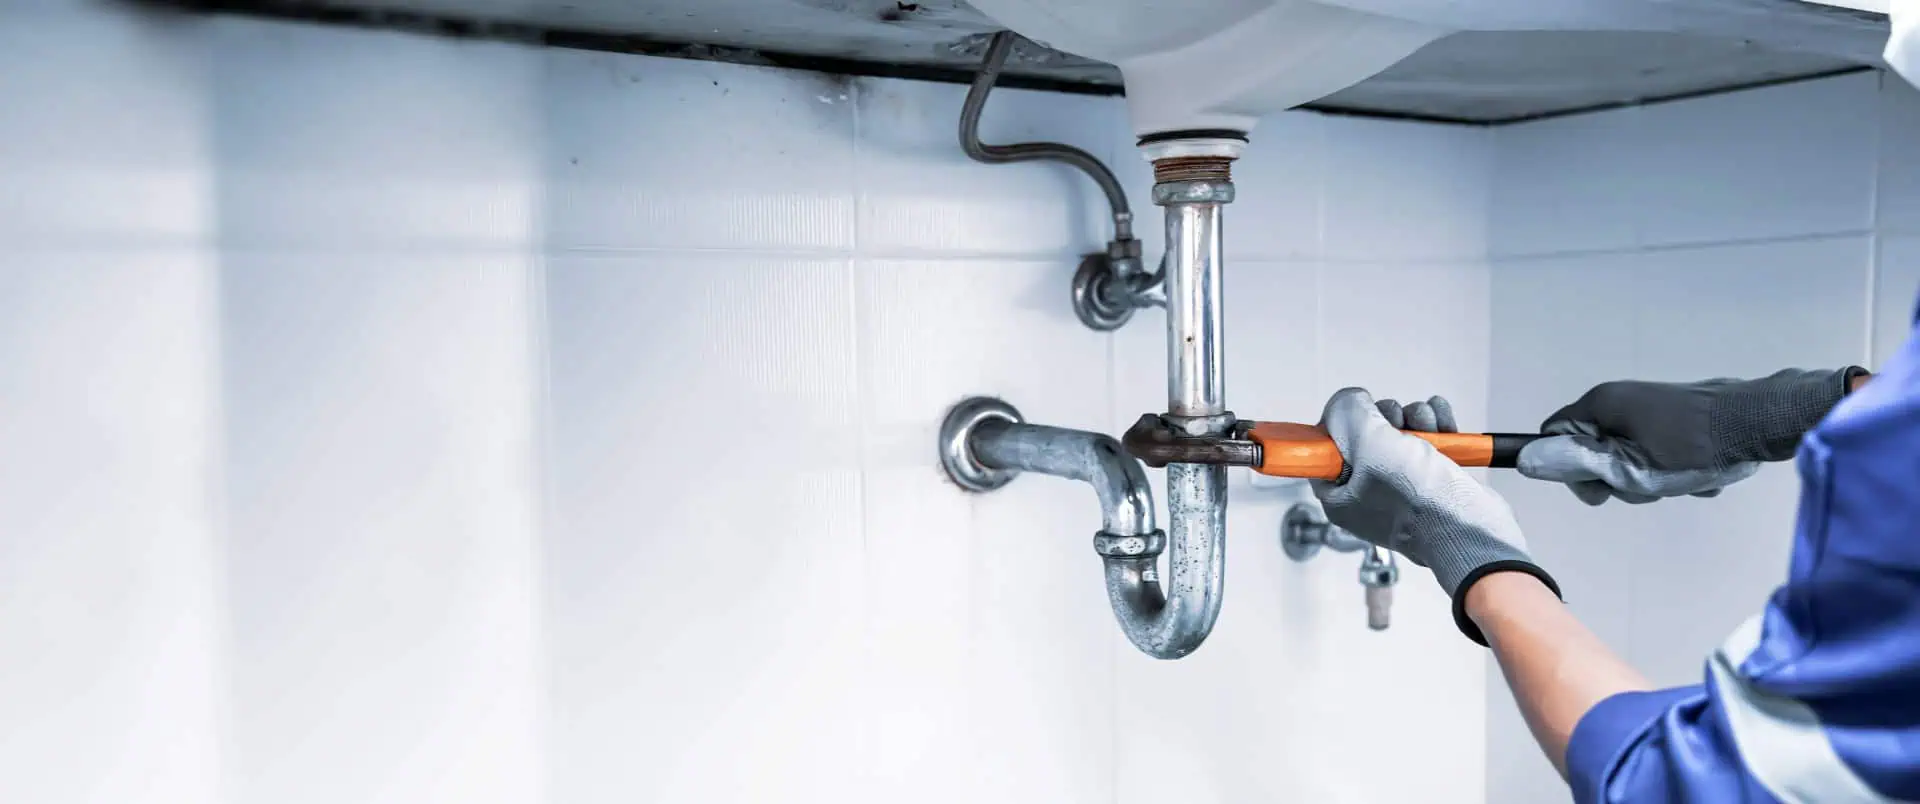 plumbing services in dallas, tx